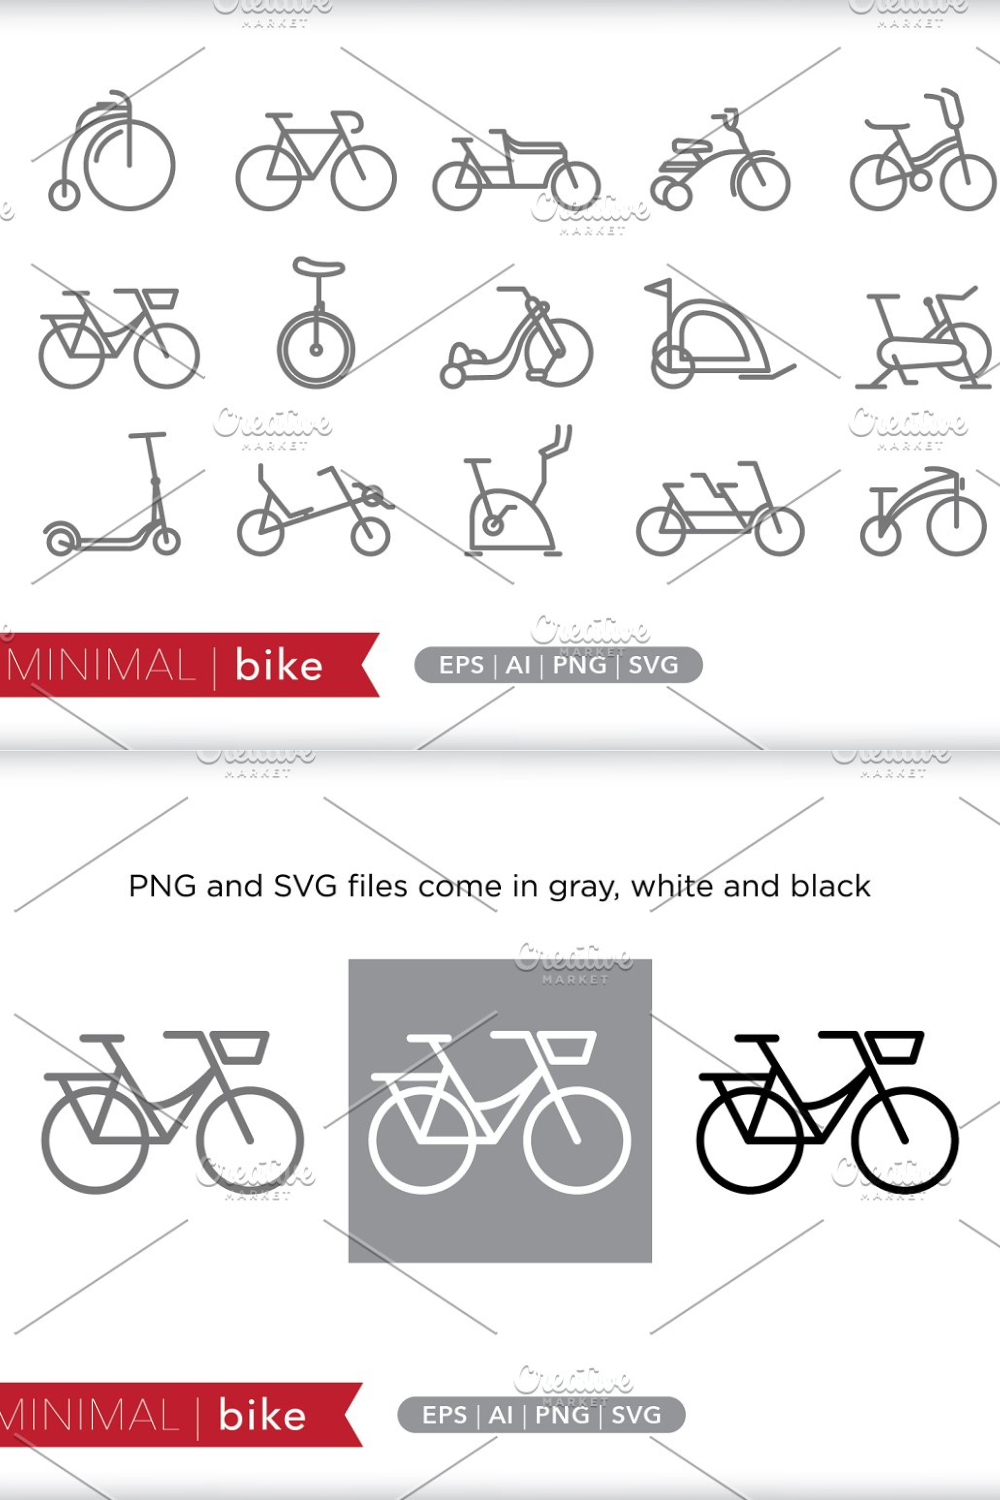 Minimal Bike Icons - Pinterest.